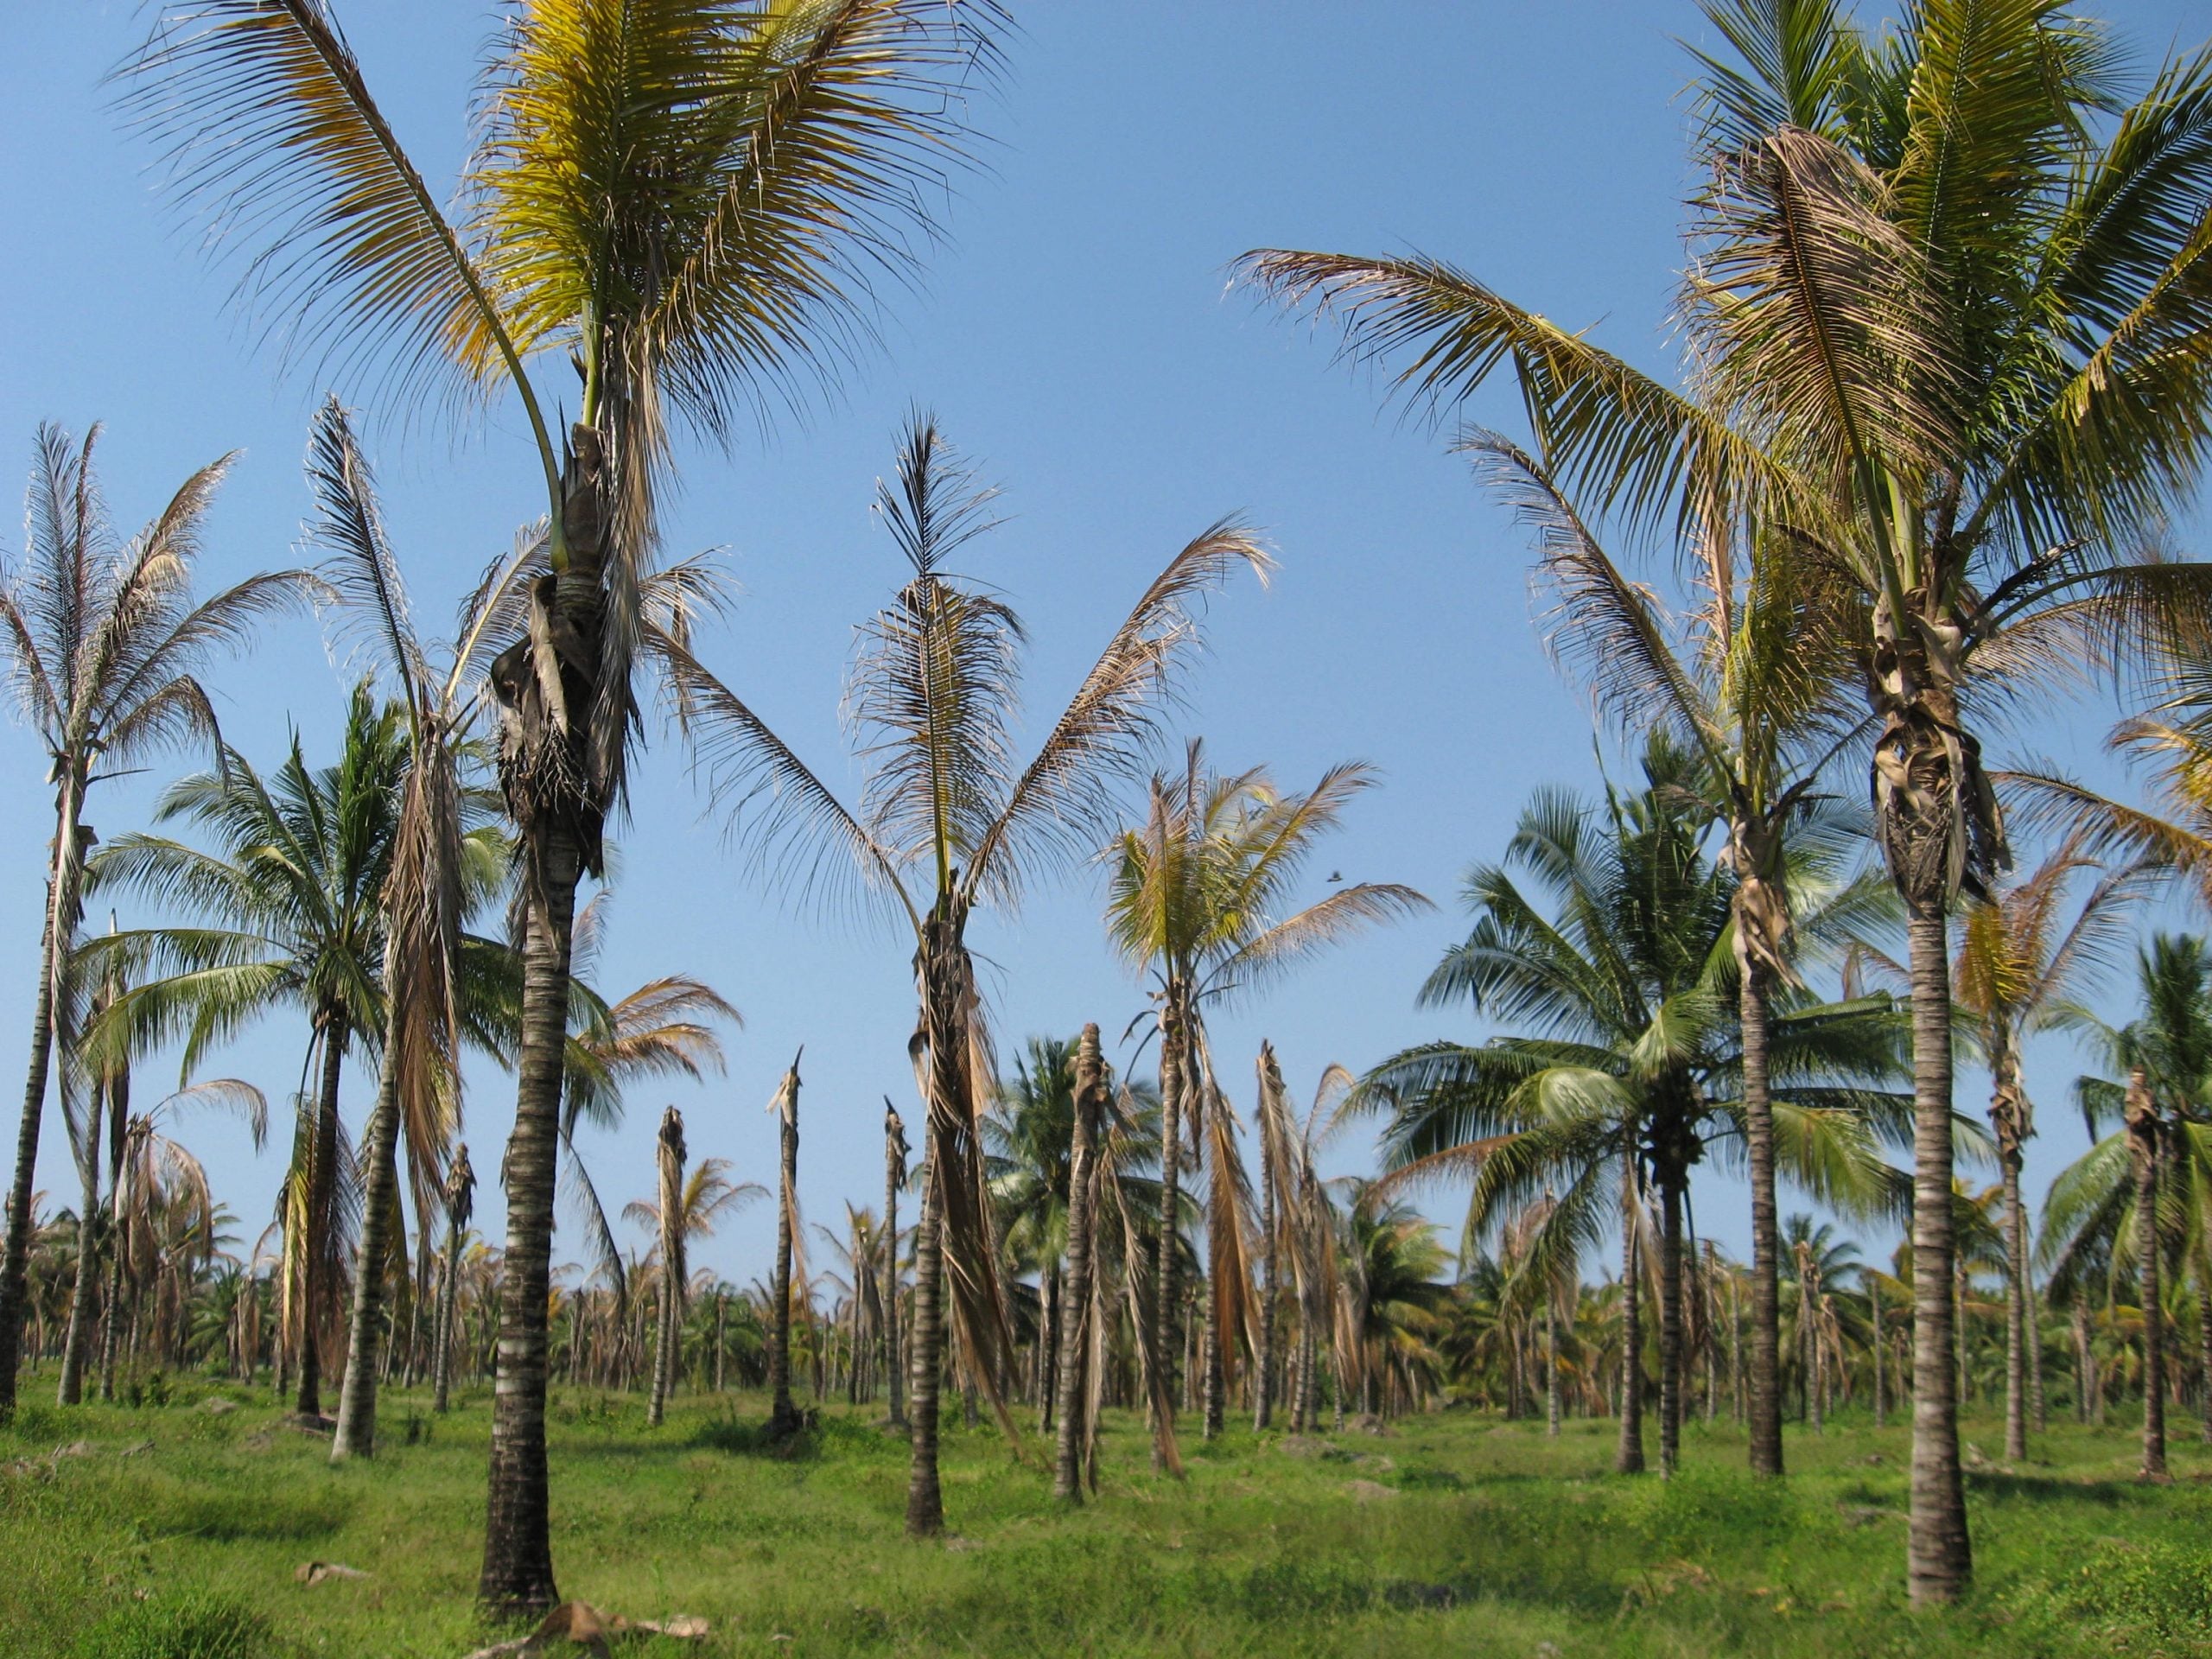 Pest Control Measures Undertaken in Coconut Farms